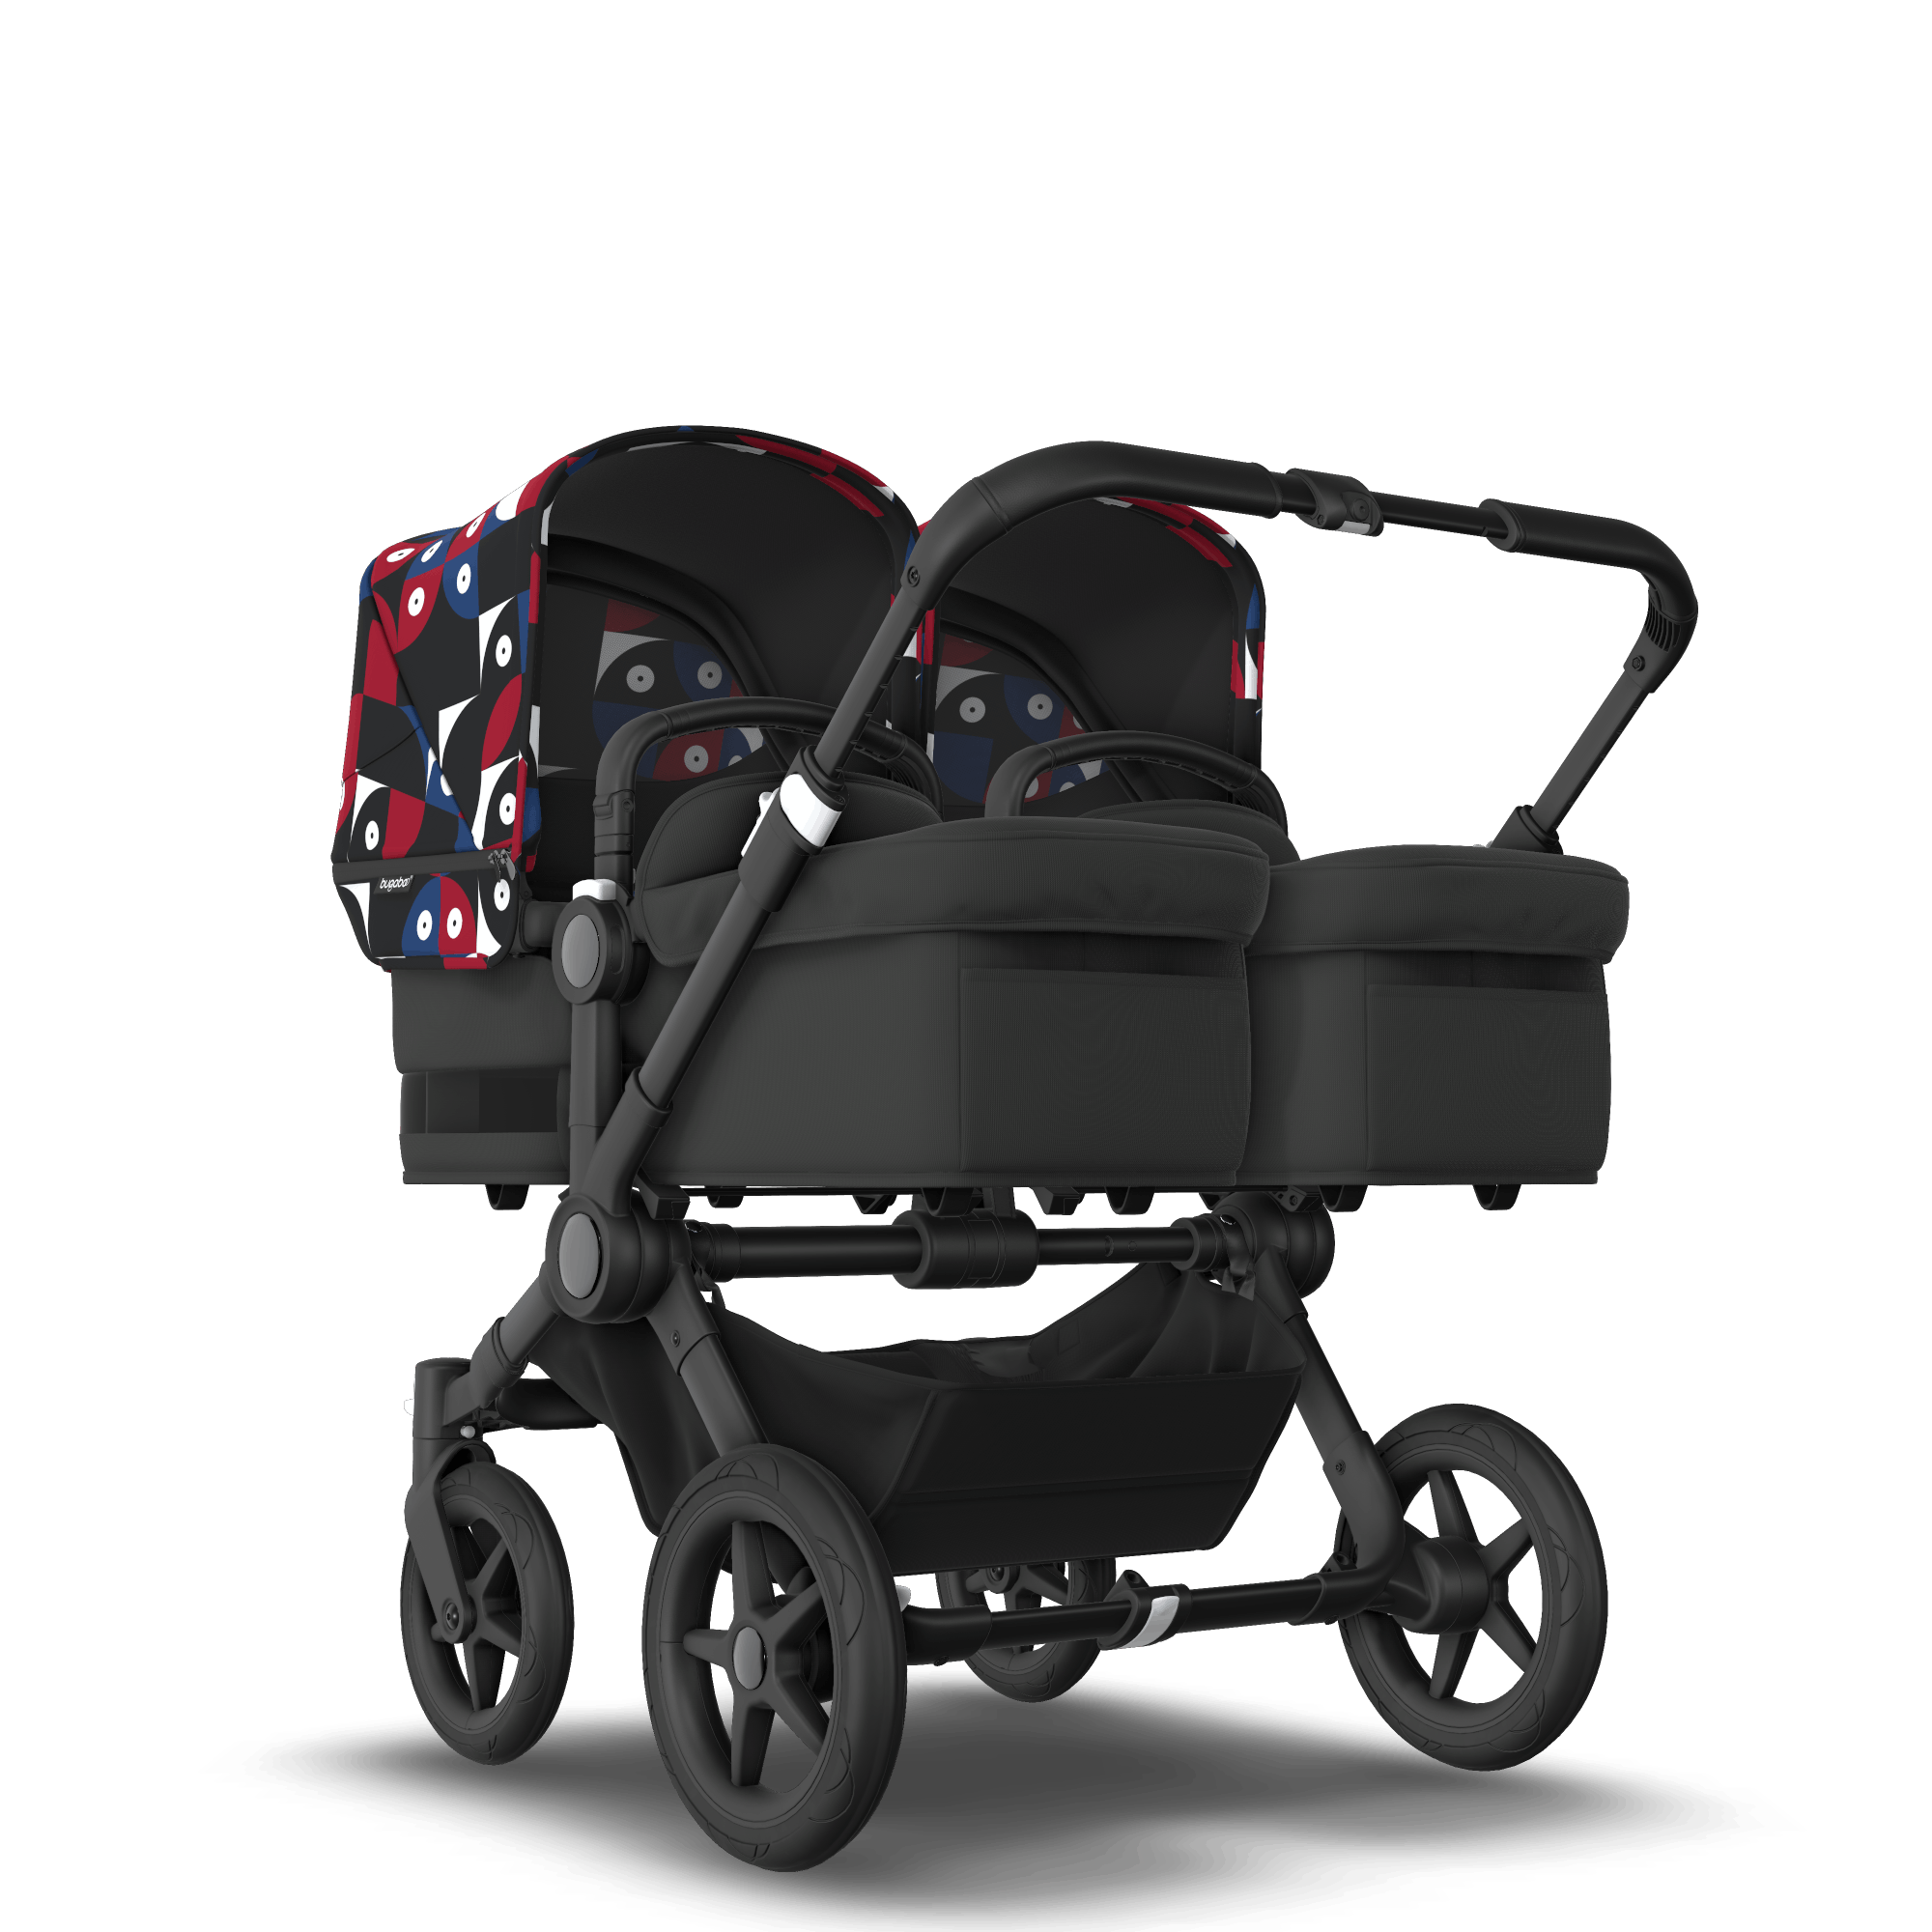 Bugaboo Donkey 5 Twin bassinet and seat stroller black base midnight black fabrics animal explorer red/blue sun canopy